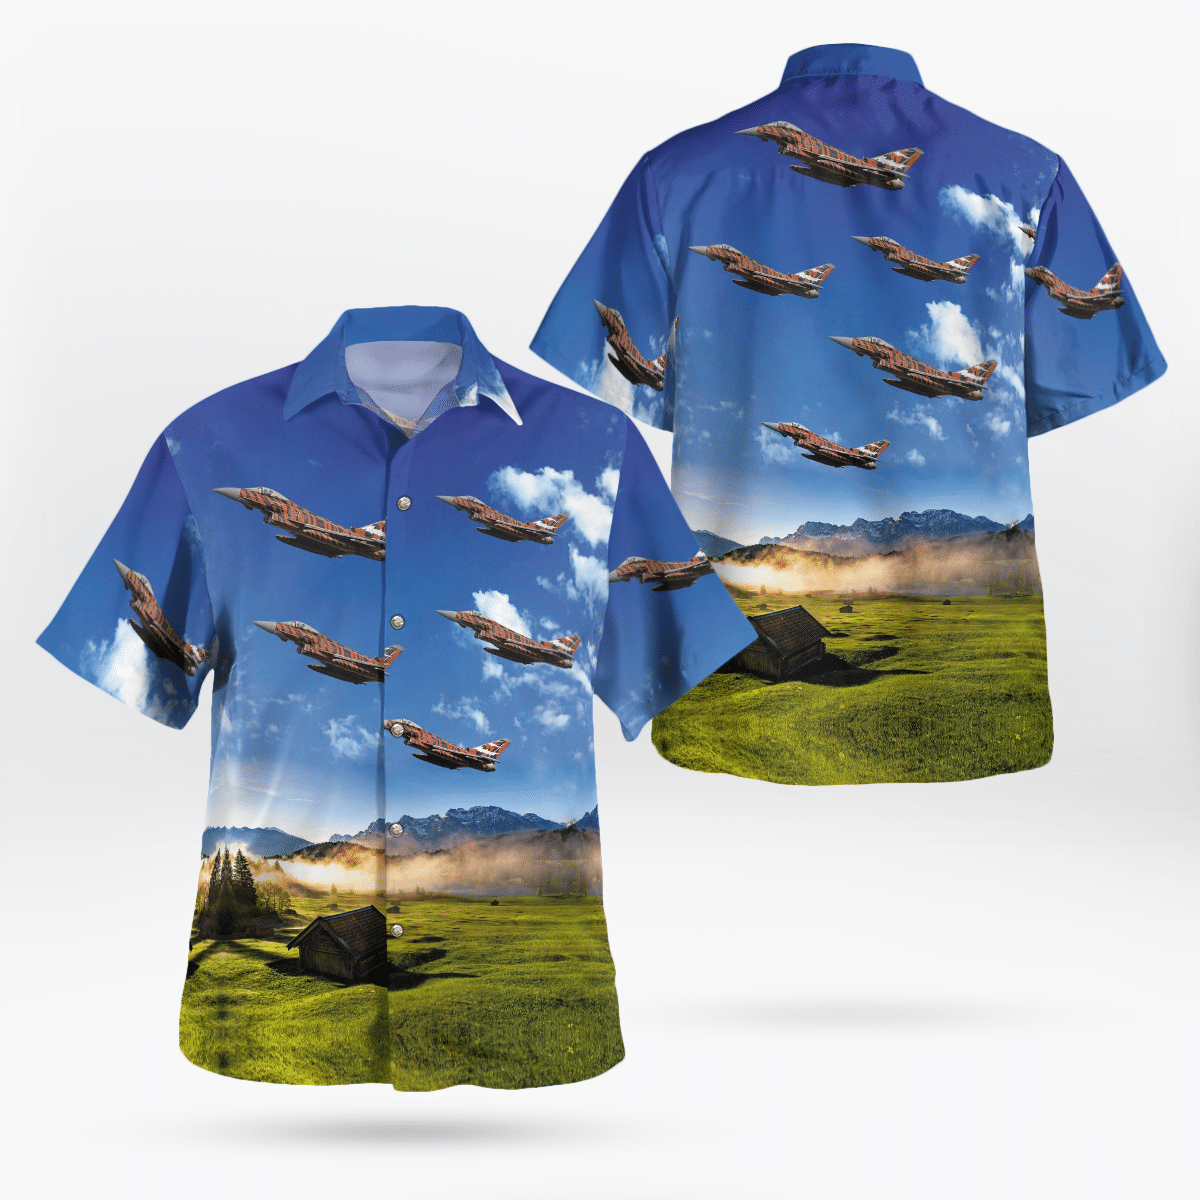 Get a new Hawaiian shirt to enjoy summer vacation 188